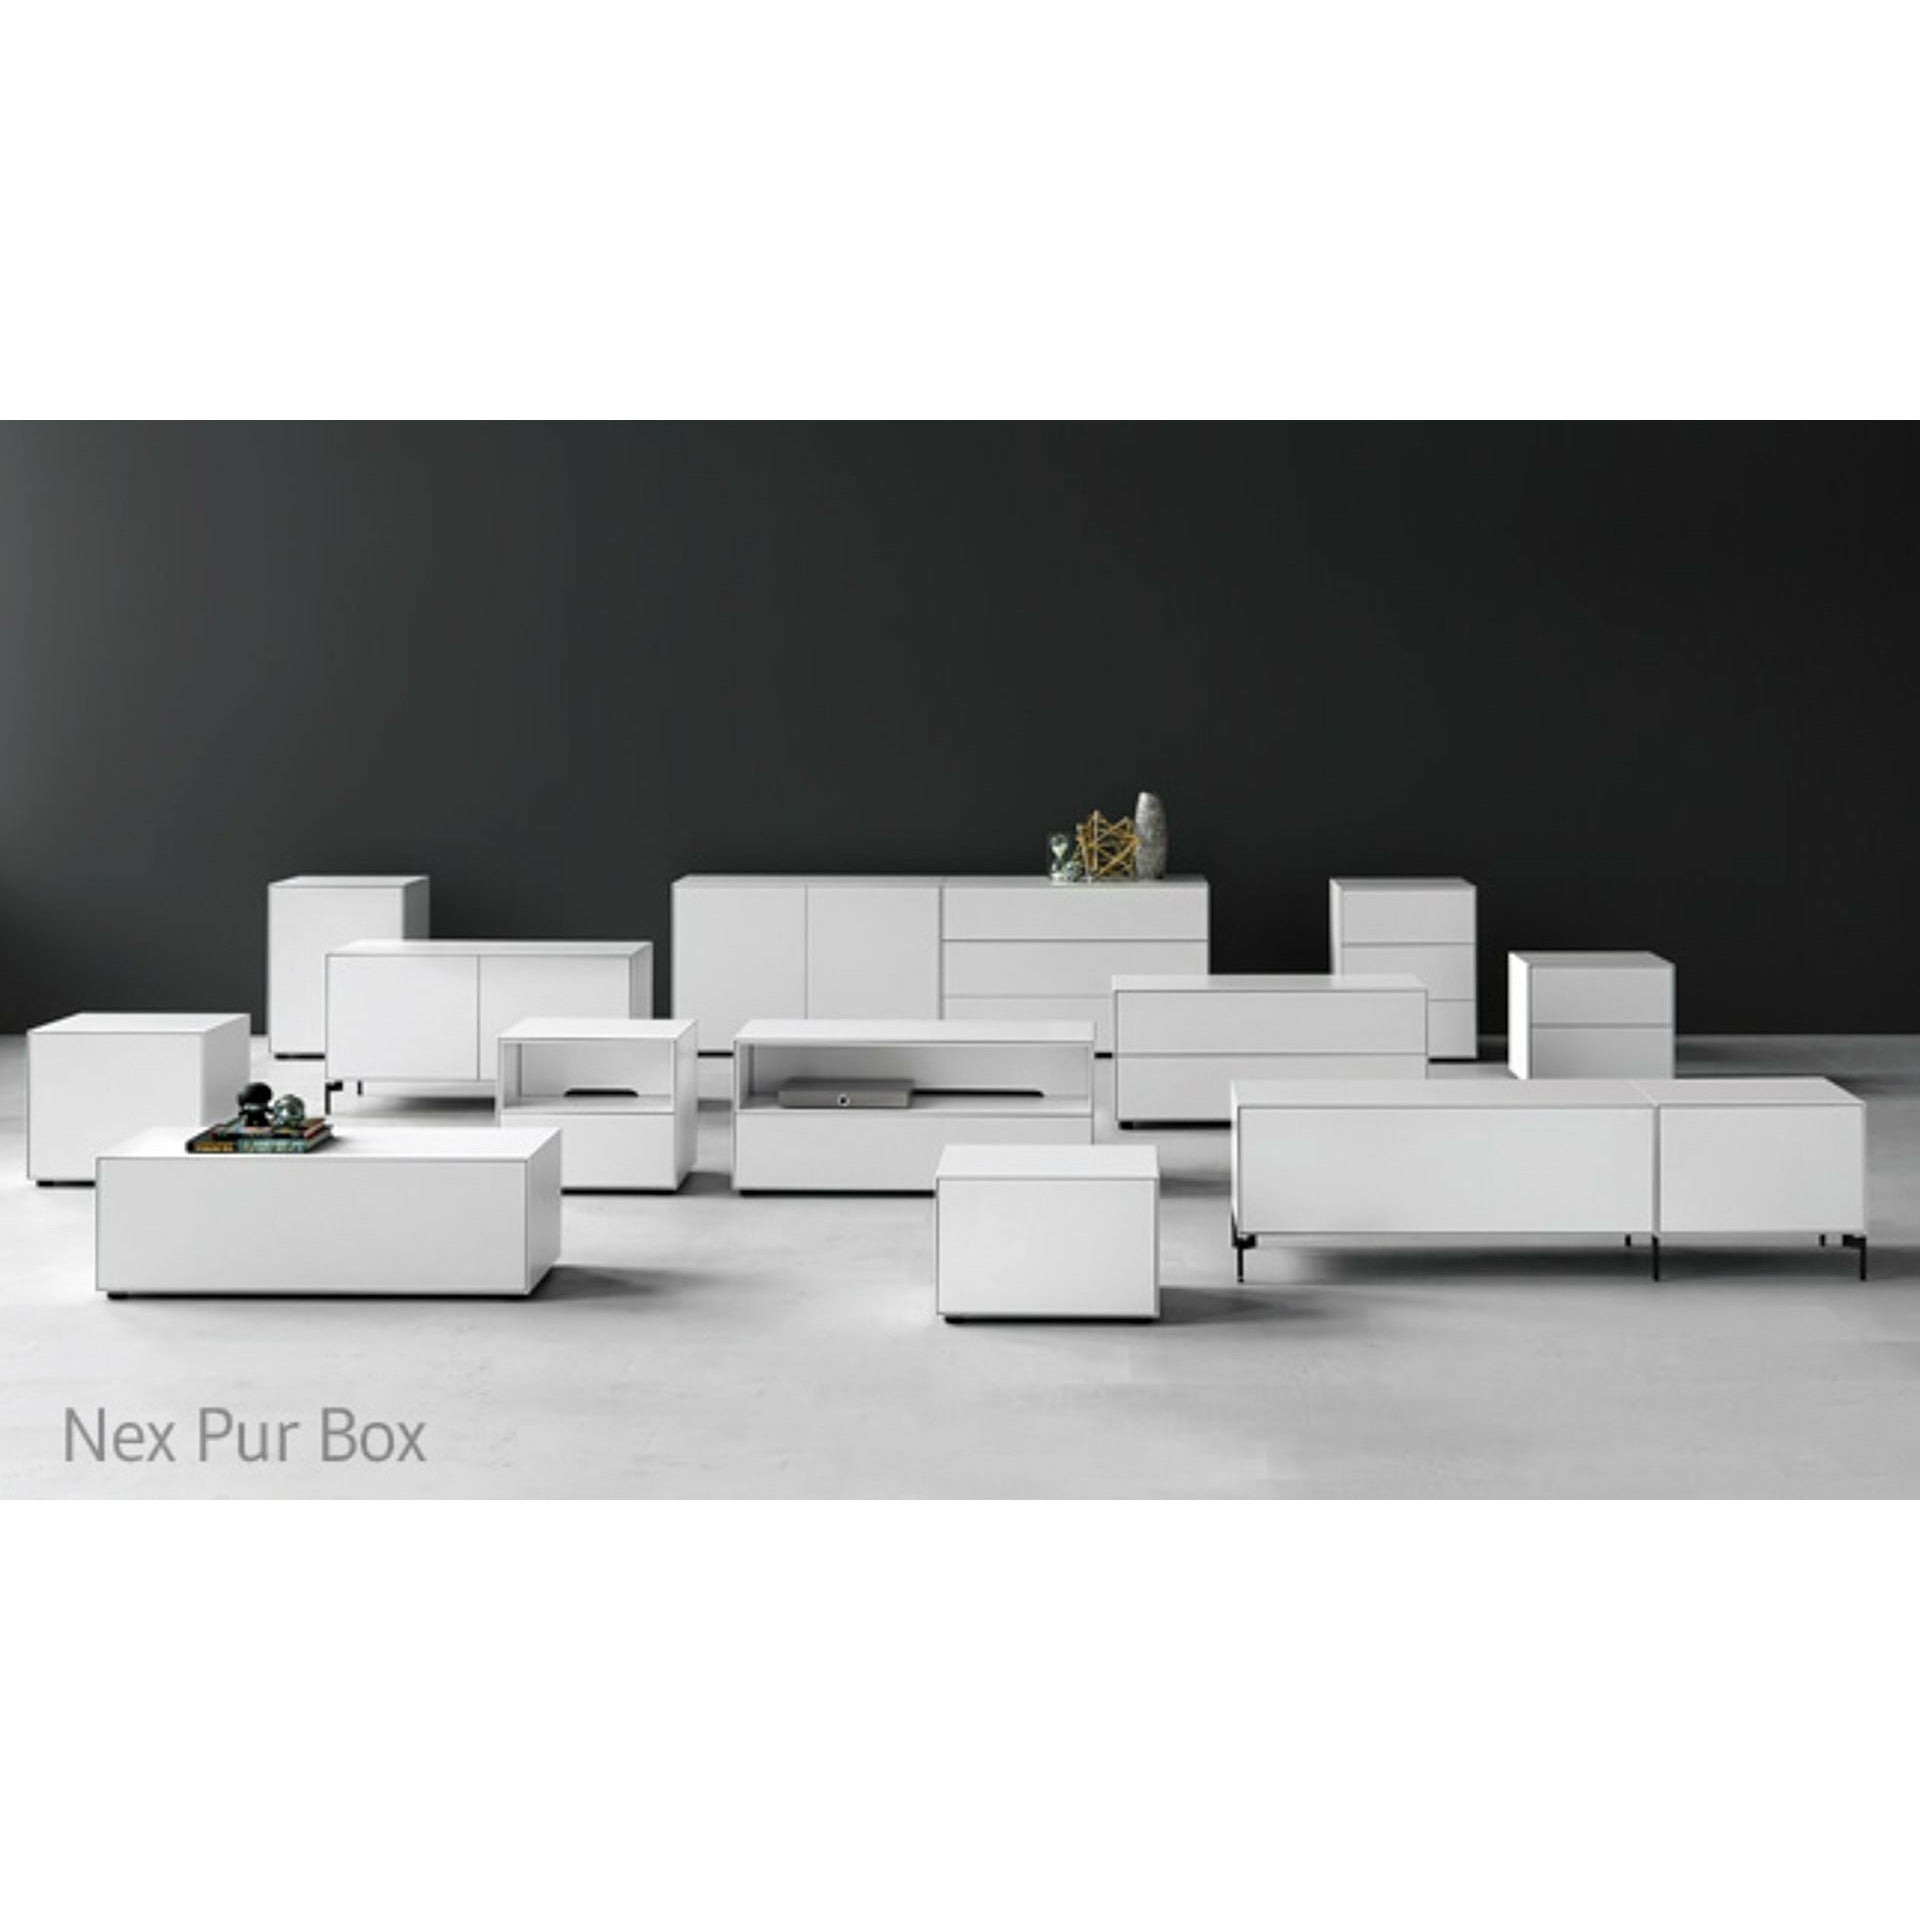 Piure Nex Pur Box Hx B 50x120 Cm, 2 Schubladen